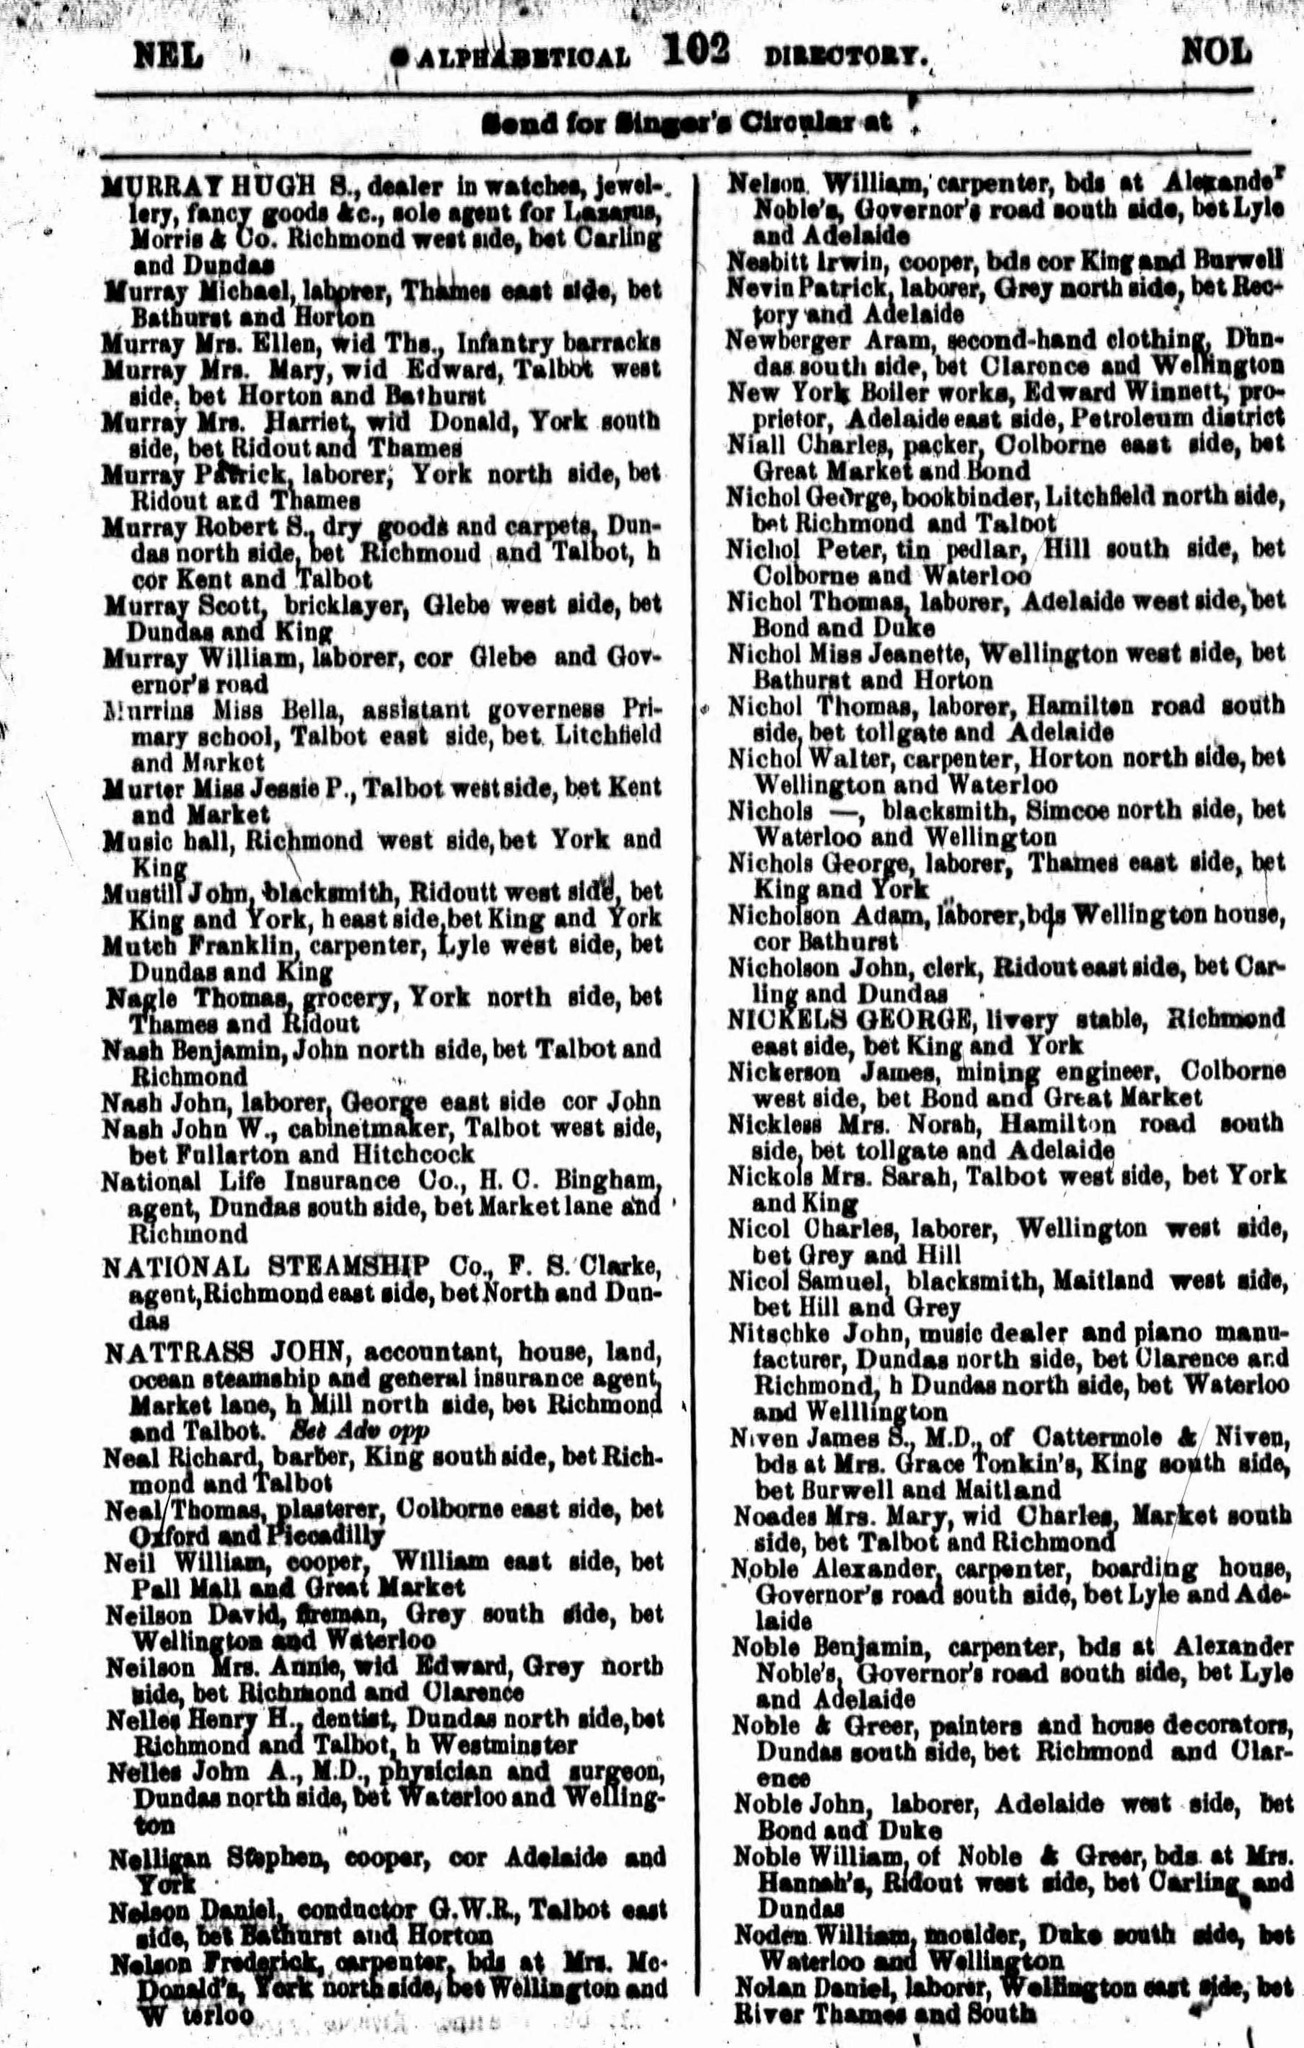 1873 London Ont City Directory for Nichols